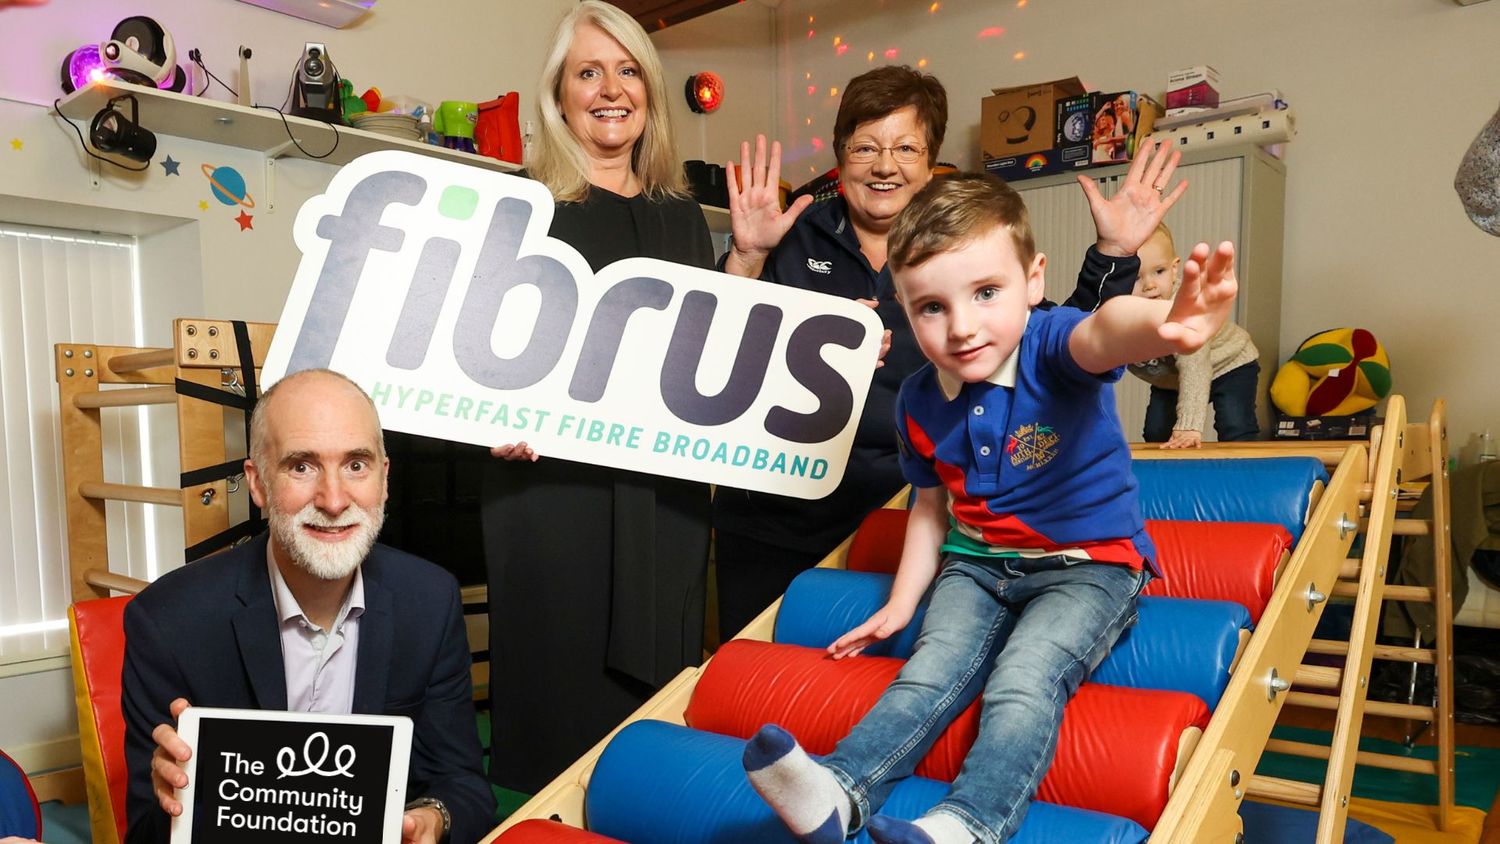 Fibrus awards £55k to help address digital poverty 